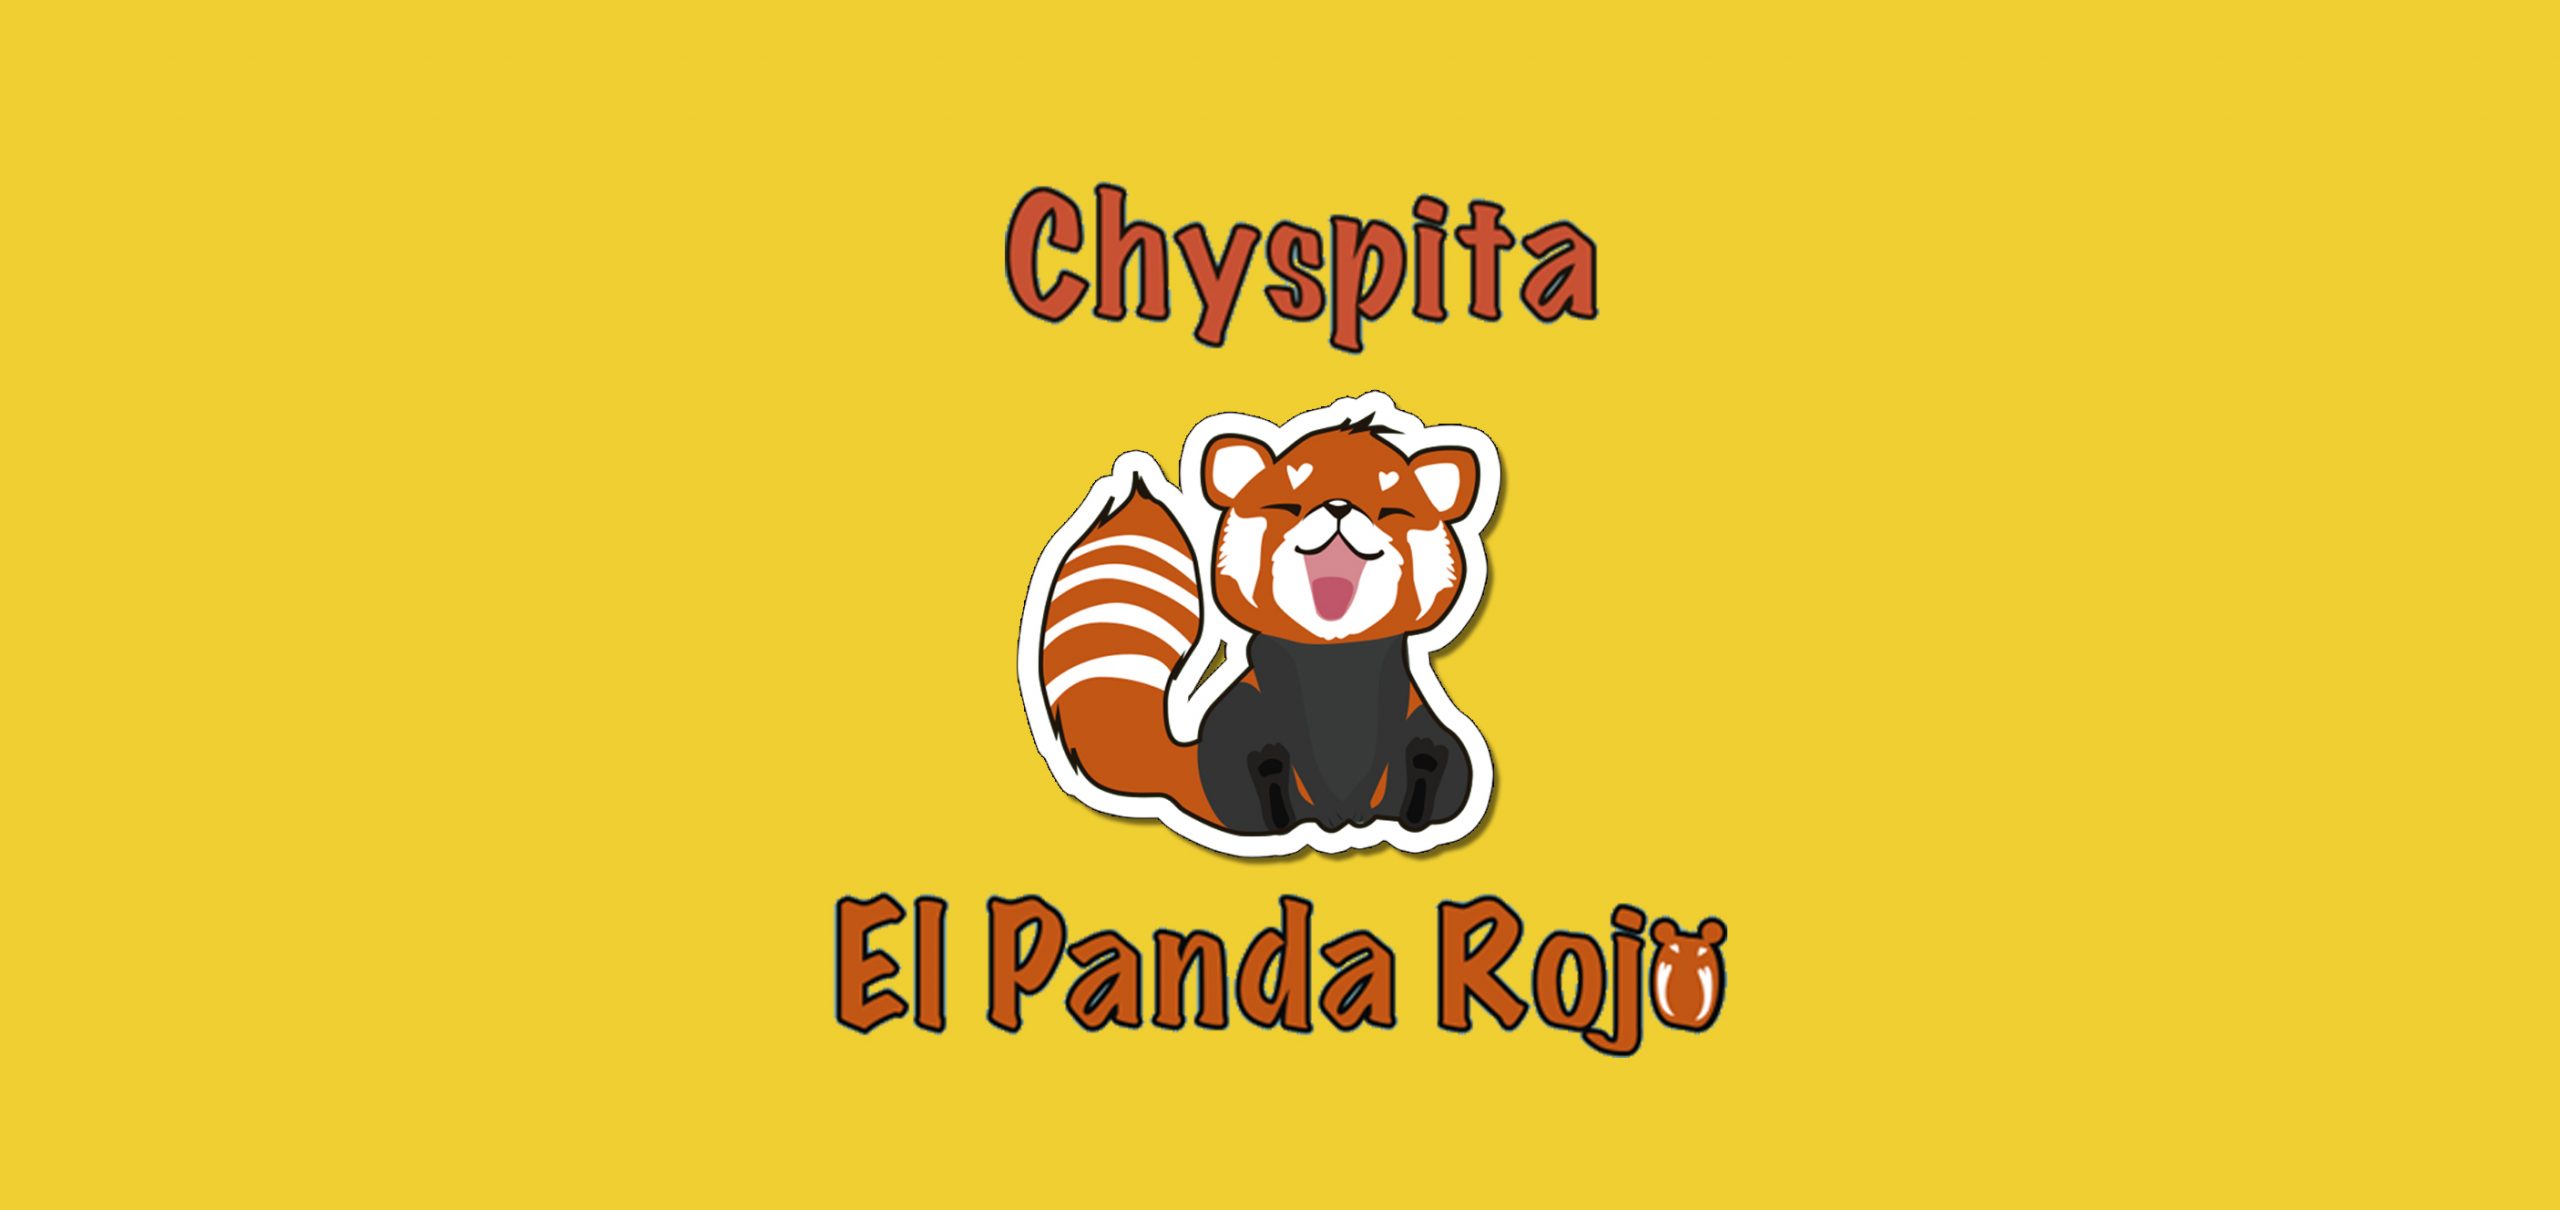 Cuento infantil: "Chyspita El Panda Rojo"